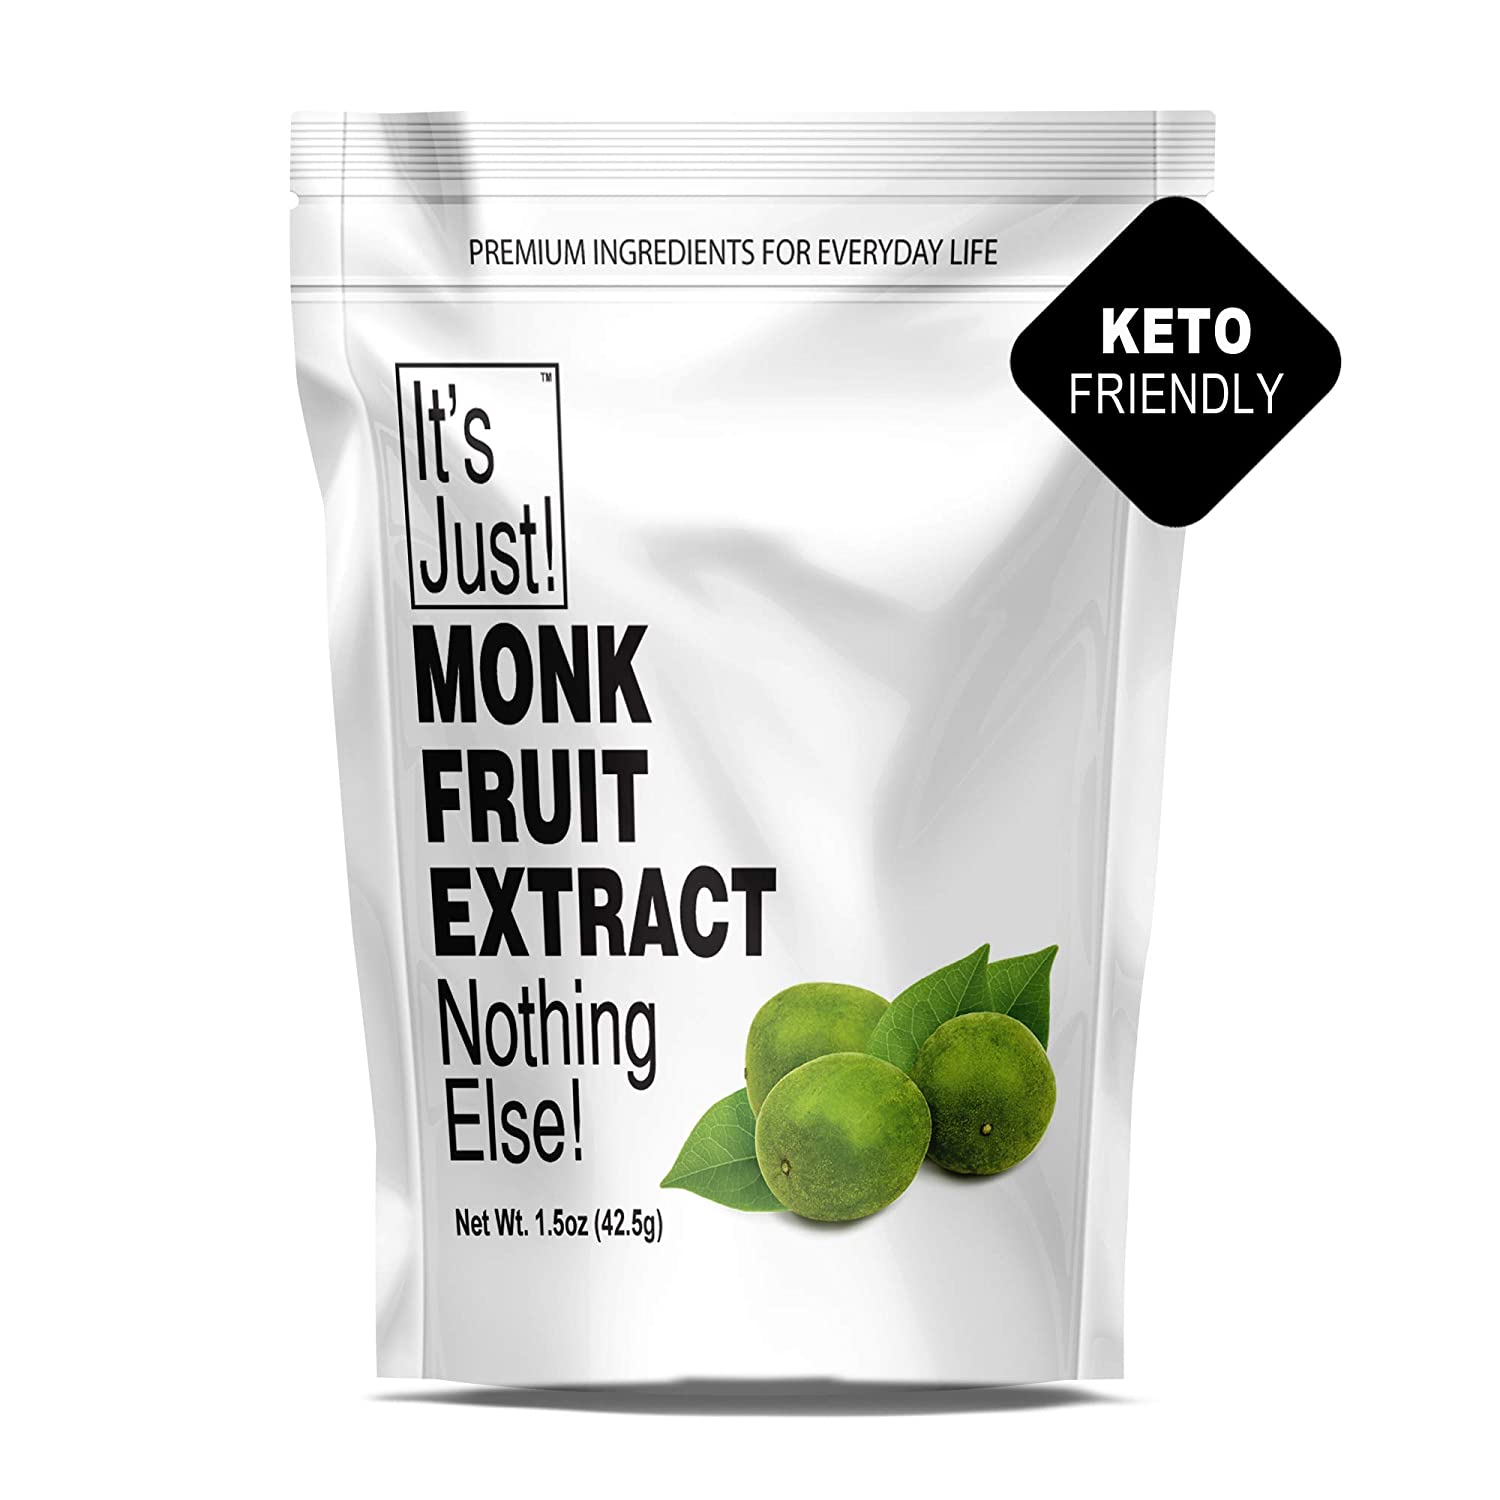 It's Just Monkfruit Extract Powder - 1.5 oz